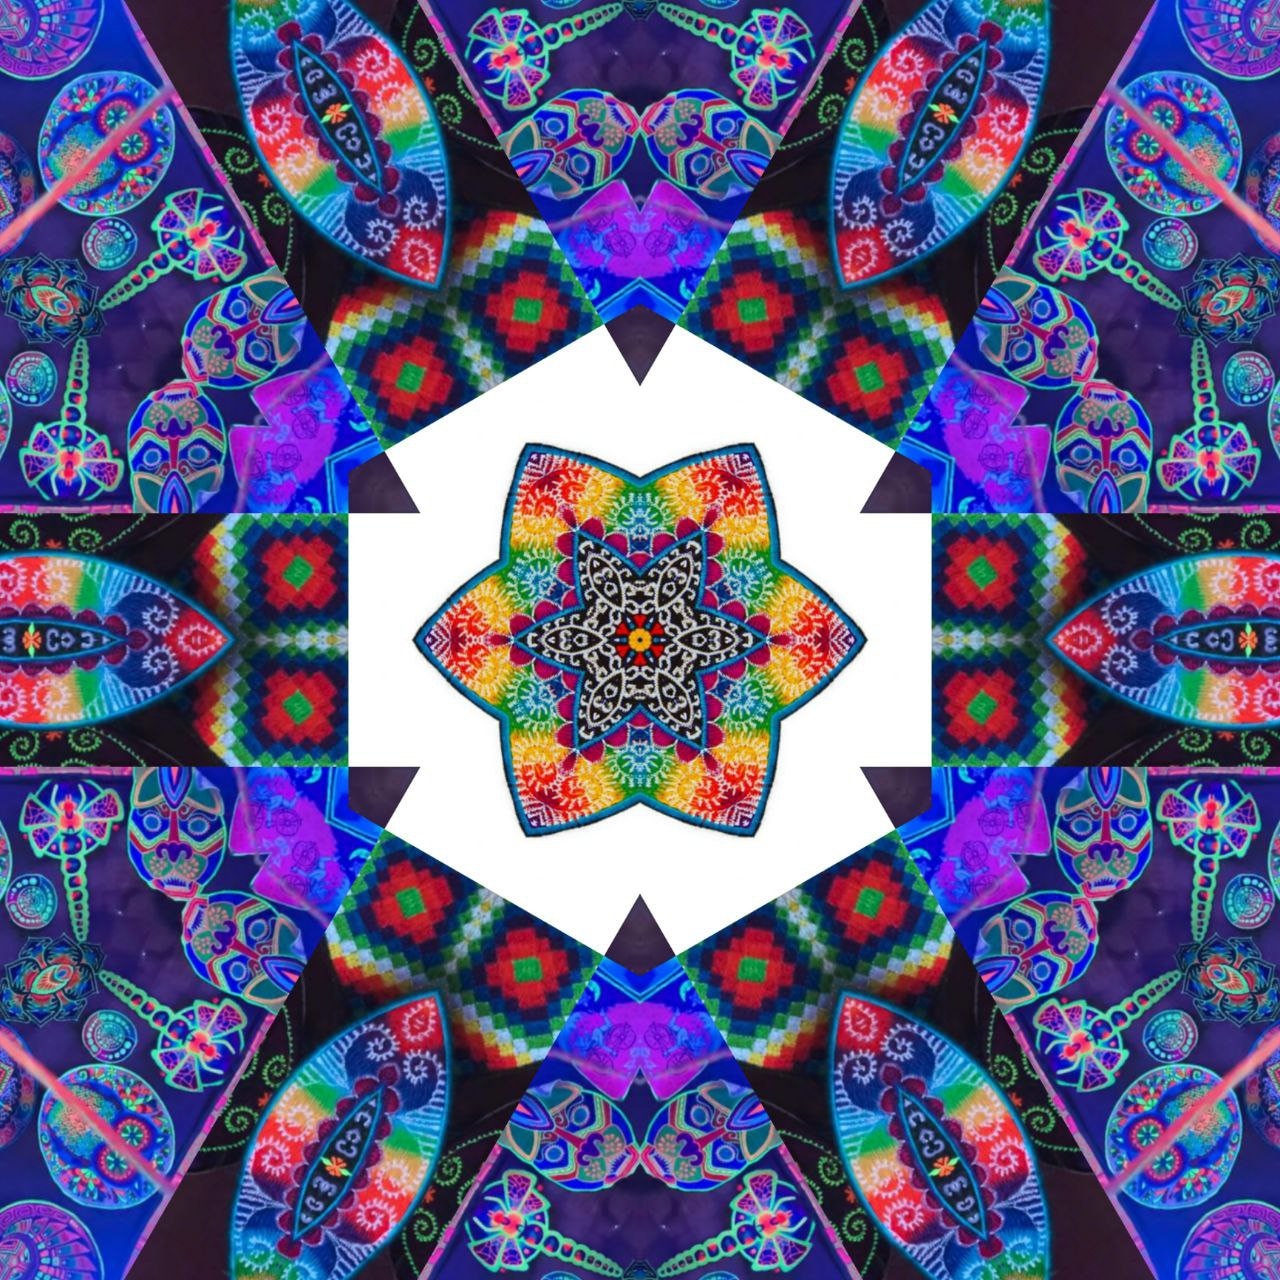 AUM Tankar Mandala Patch handmade Embroidery of Cosmic Music Goa Trance psychedelic Tankar blacklight glowing masterpiece Psytrance Art OM